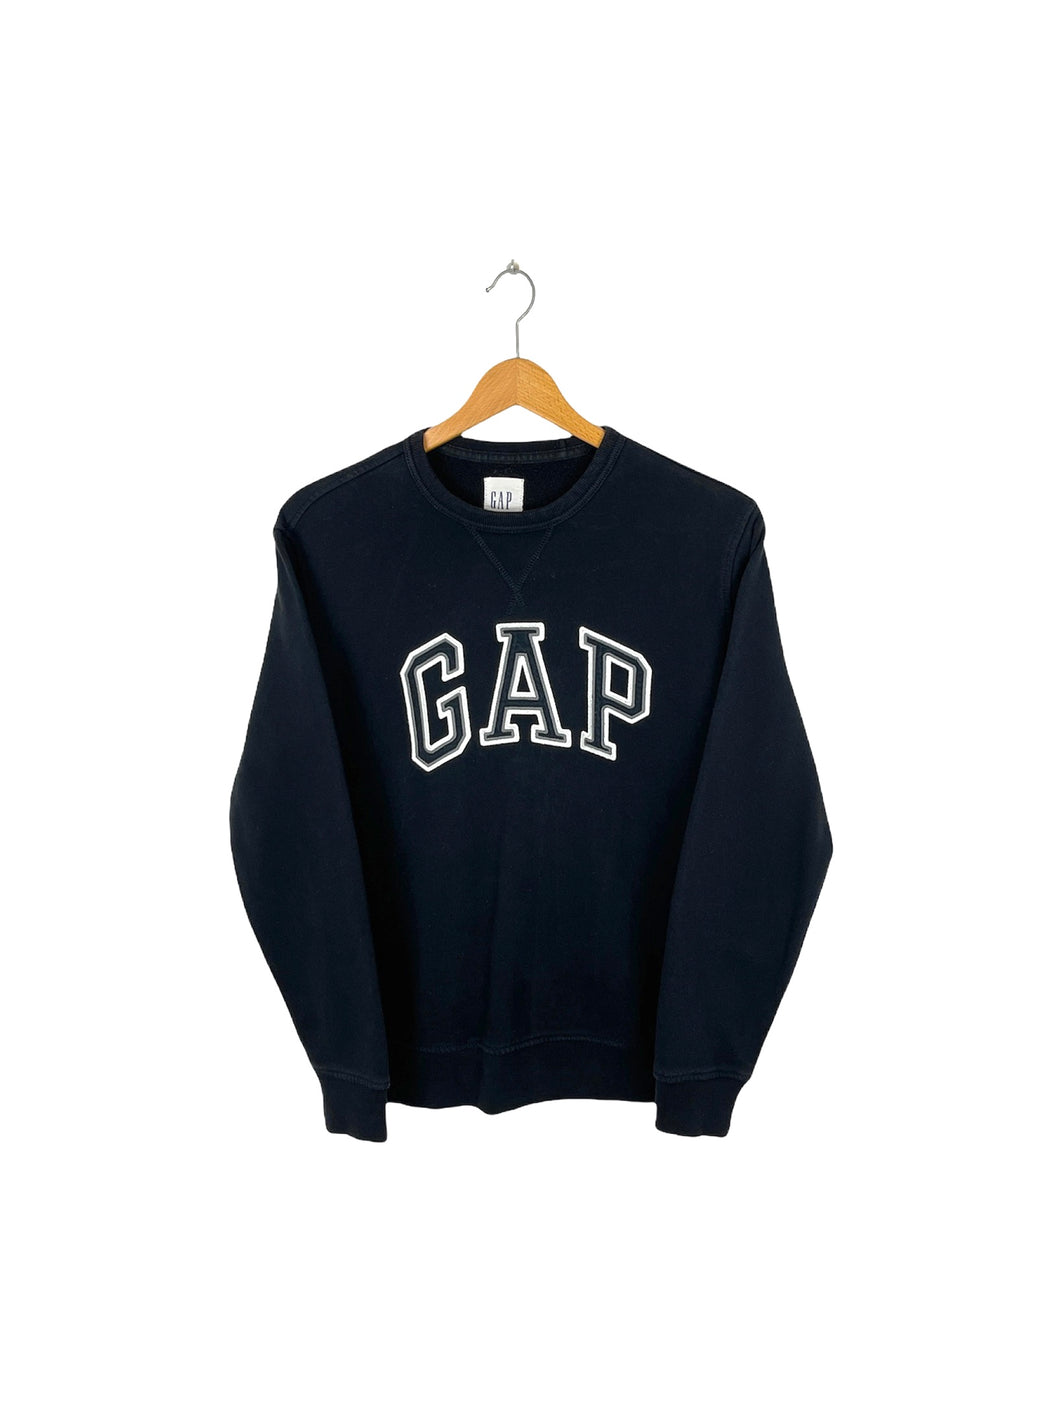 Gap Sweatshirt - XSmall